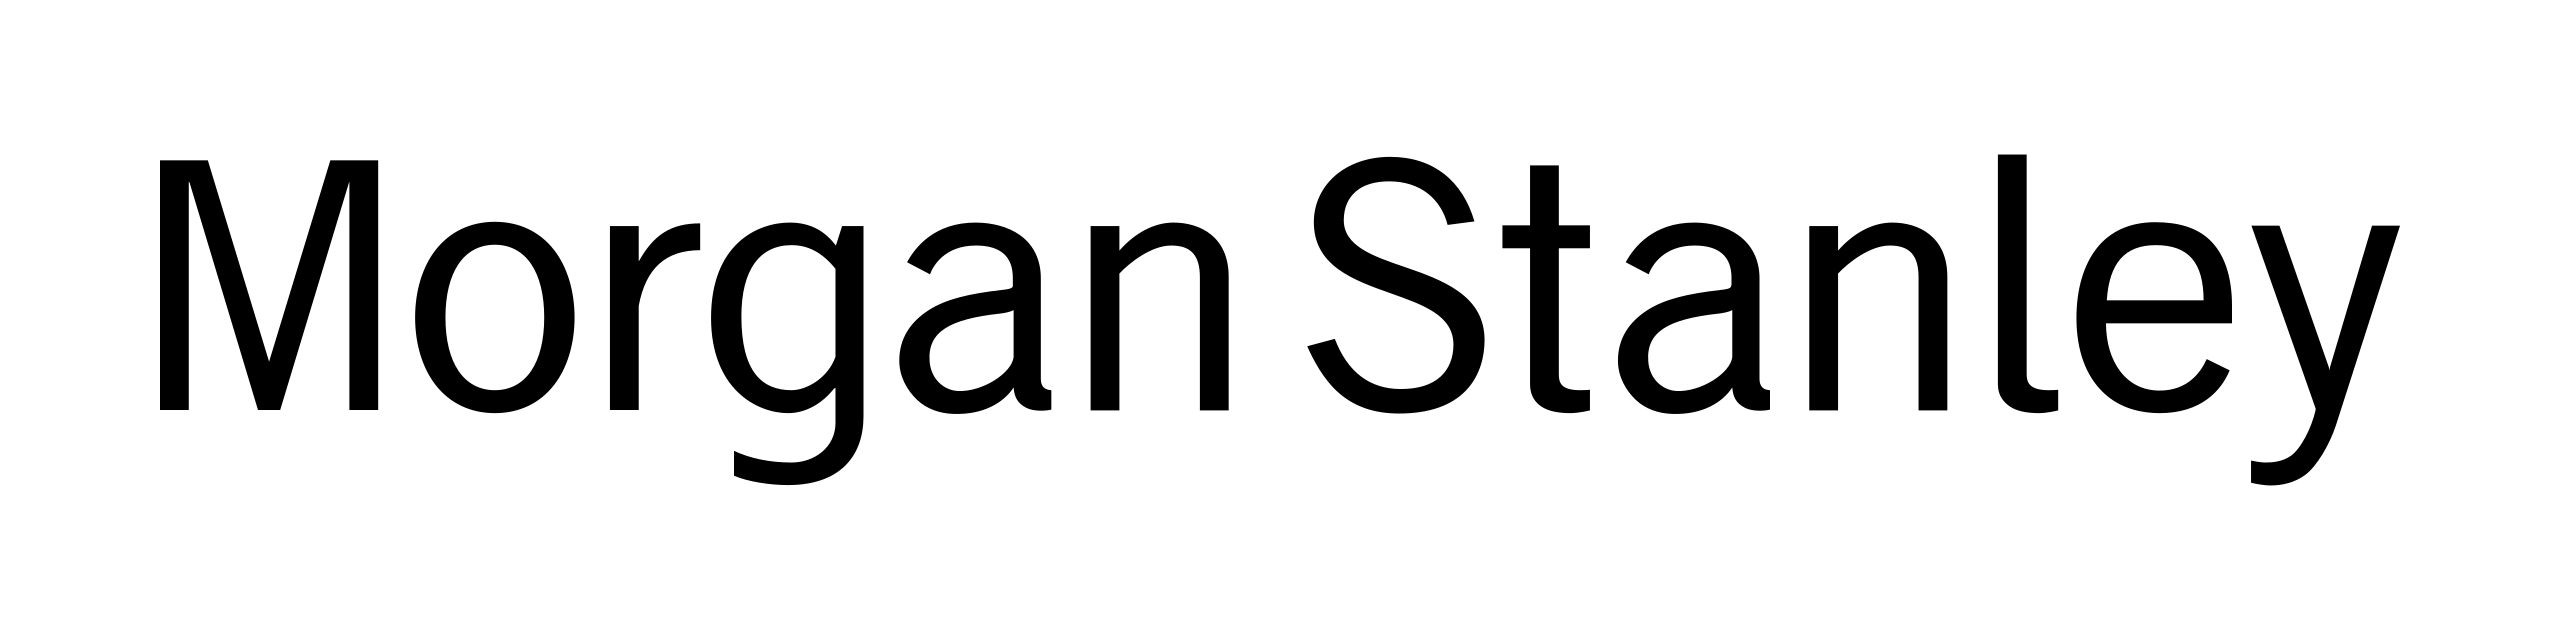 Morgan Stanley Logo PNG Pic